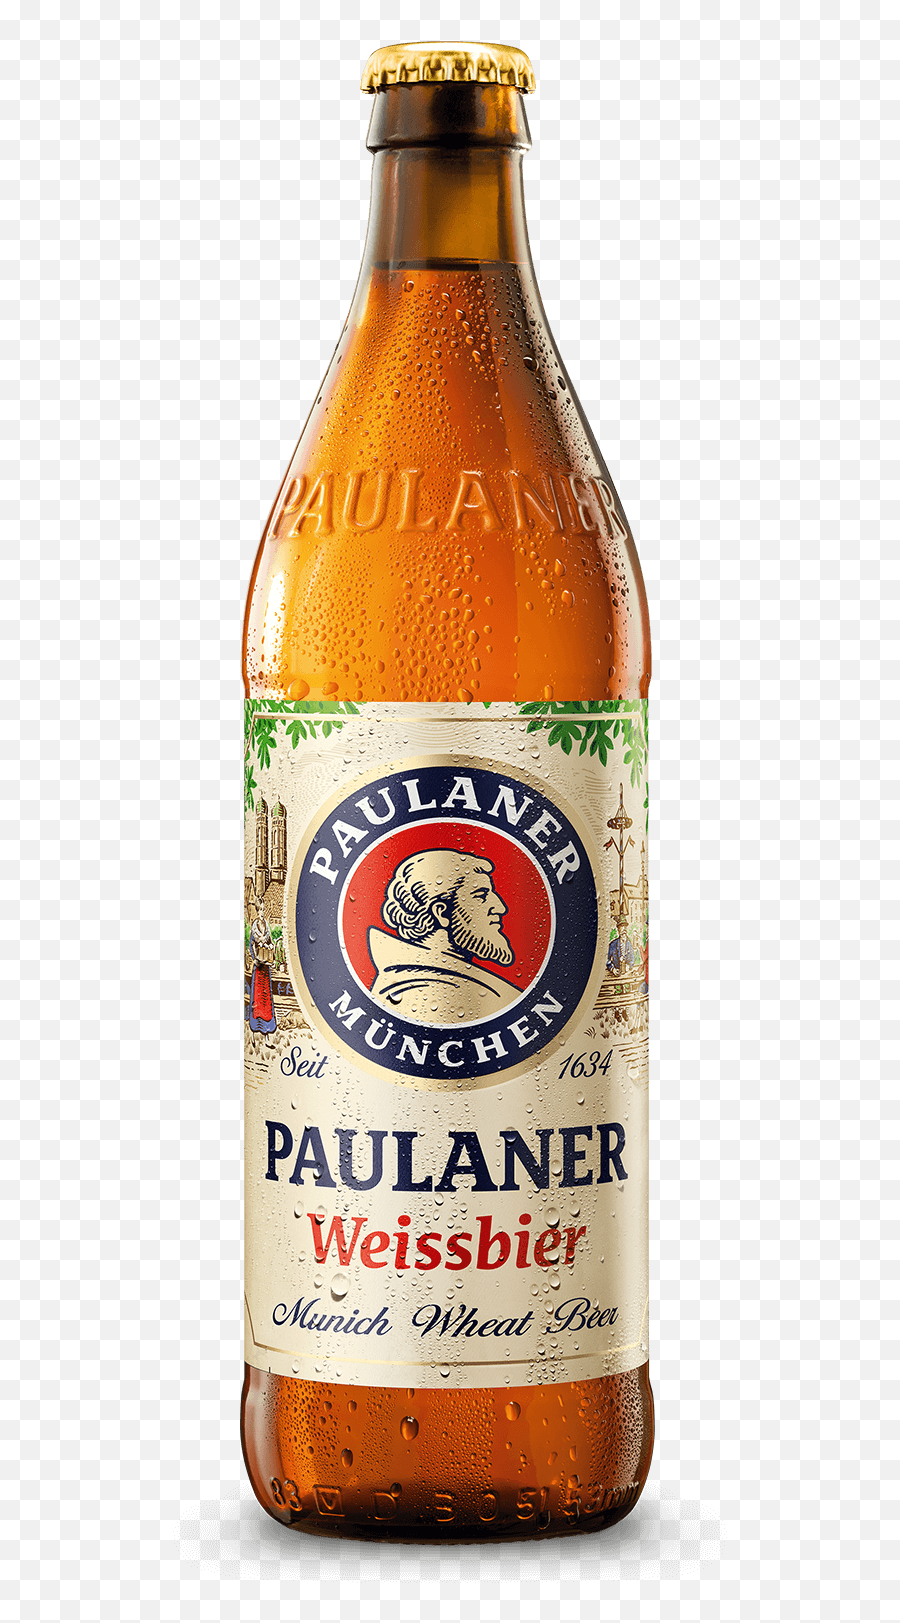 Fc Bayern München - Paulaner Weissbier Emoji,Types Of Emotions In Beer Commercials